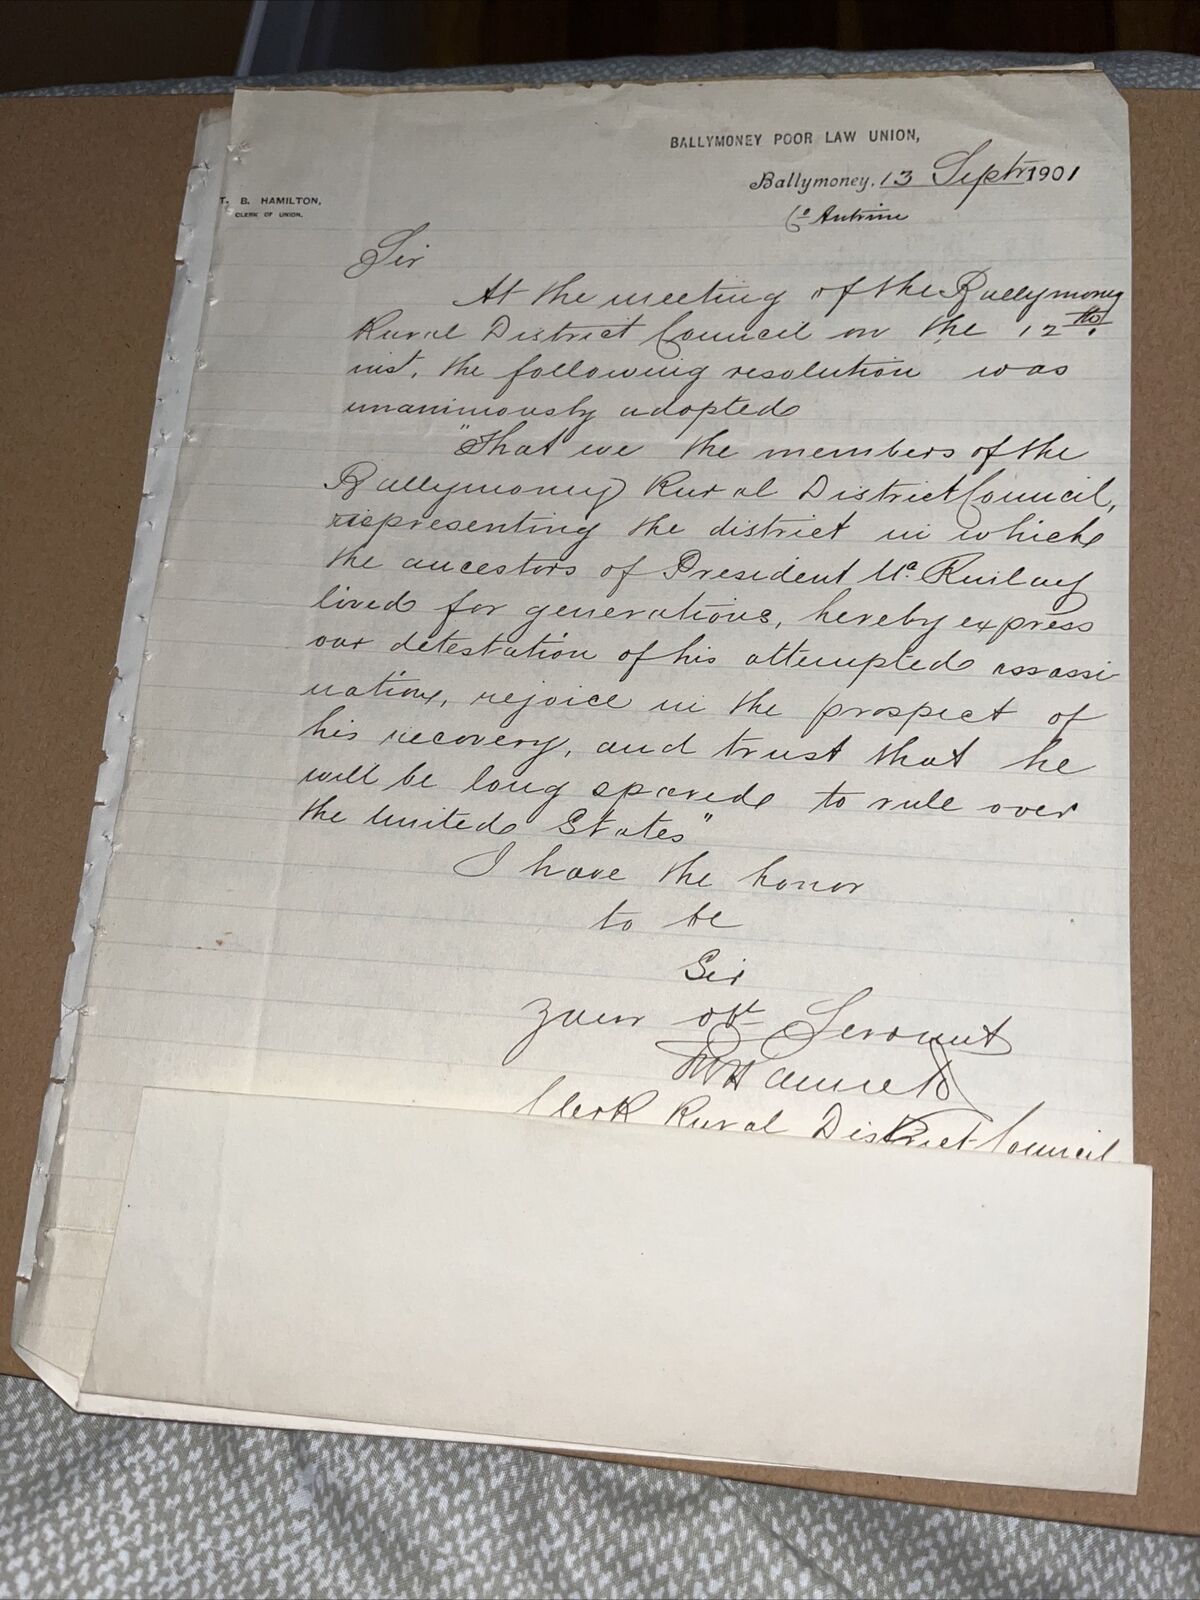 1901 Letter on Assassination President McKinley Ancestors’ Ballymoney Ireland